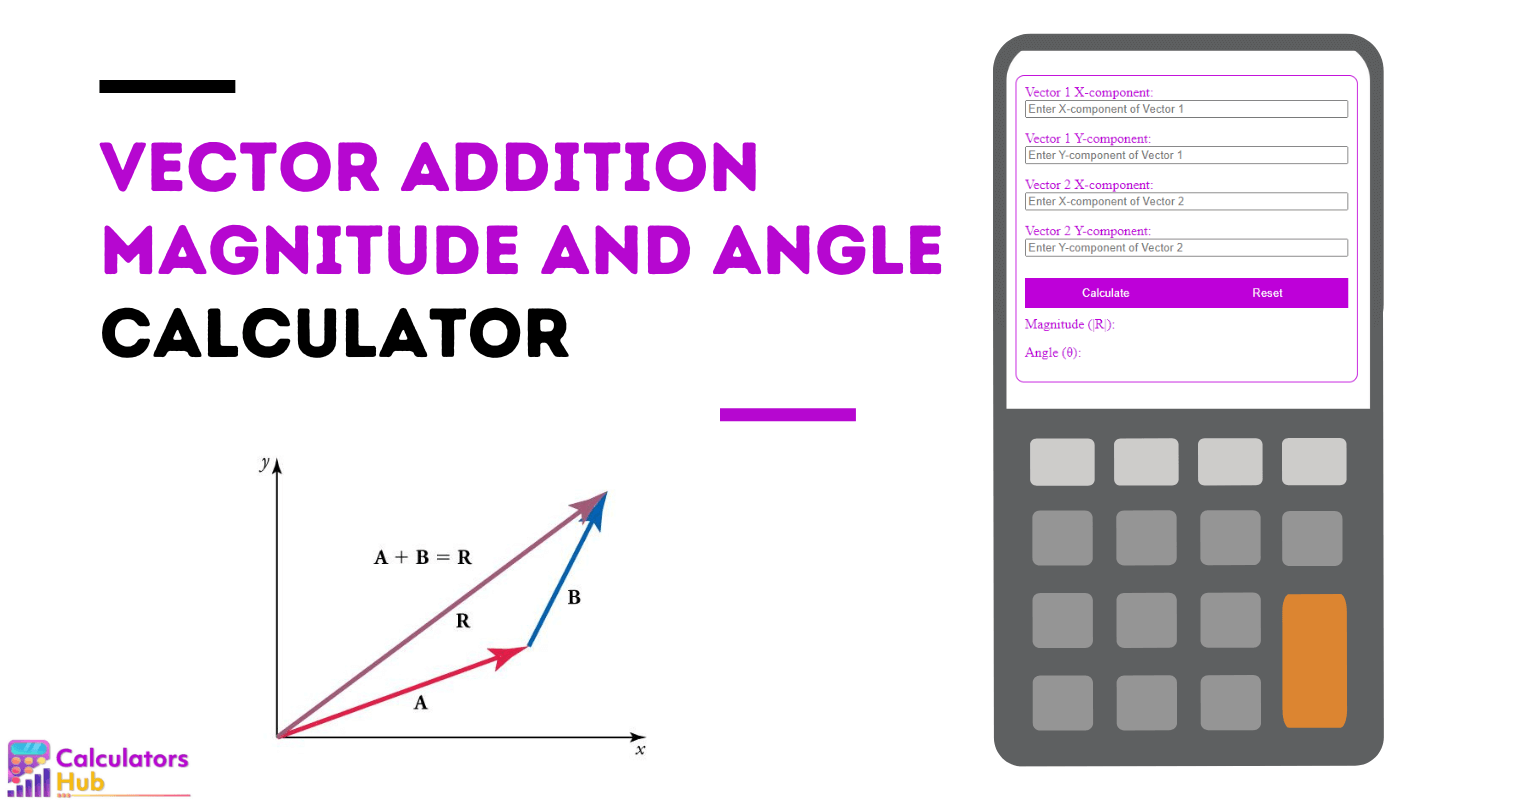 Vector Addition Calculator Magnitude and Angle